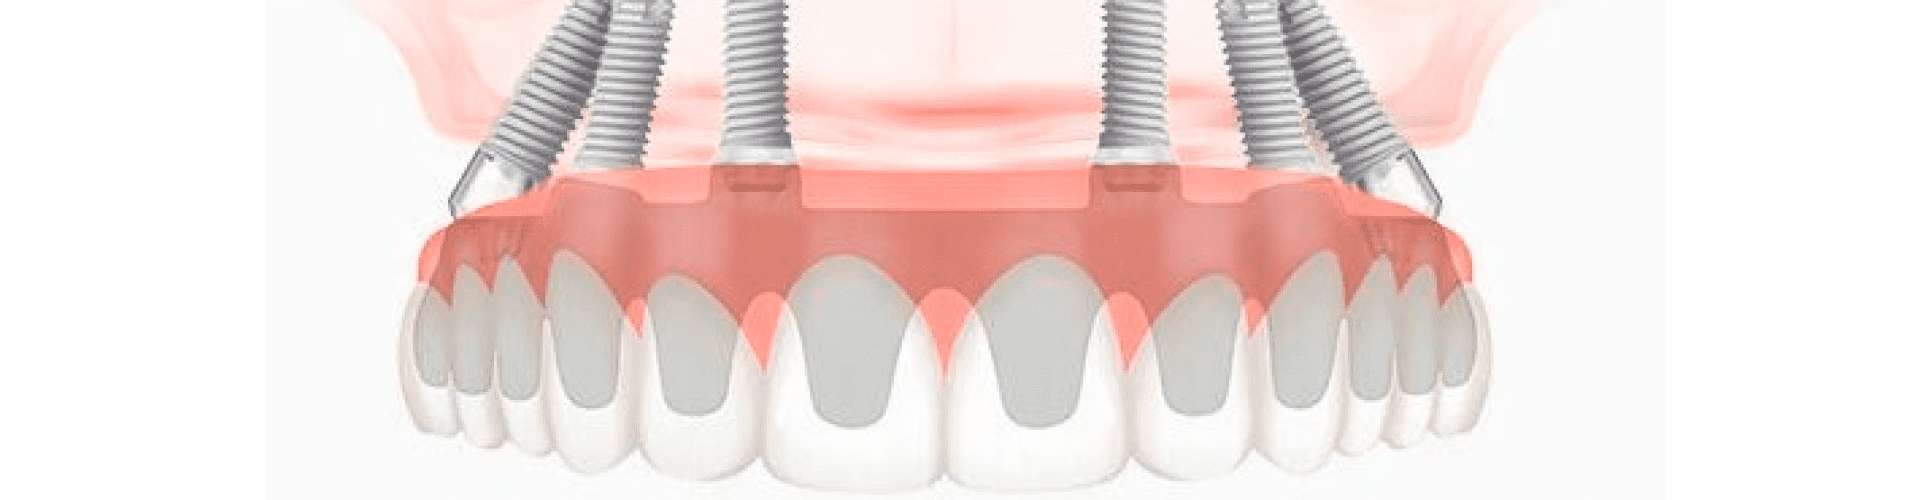 Dental implantation